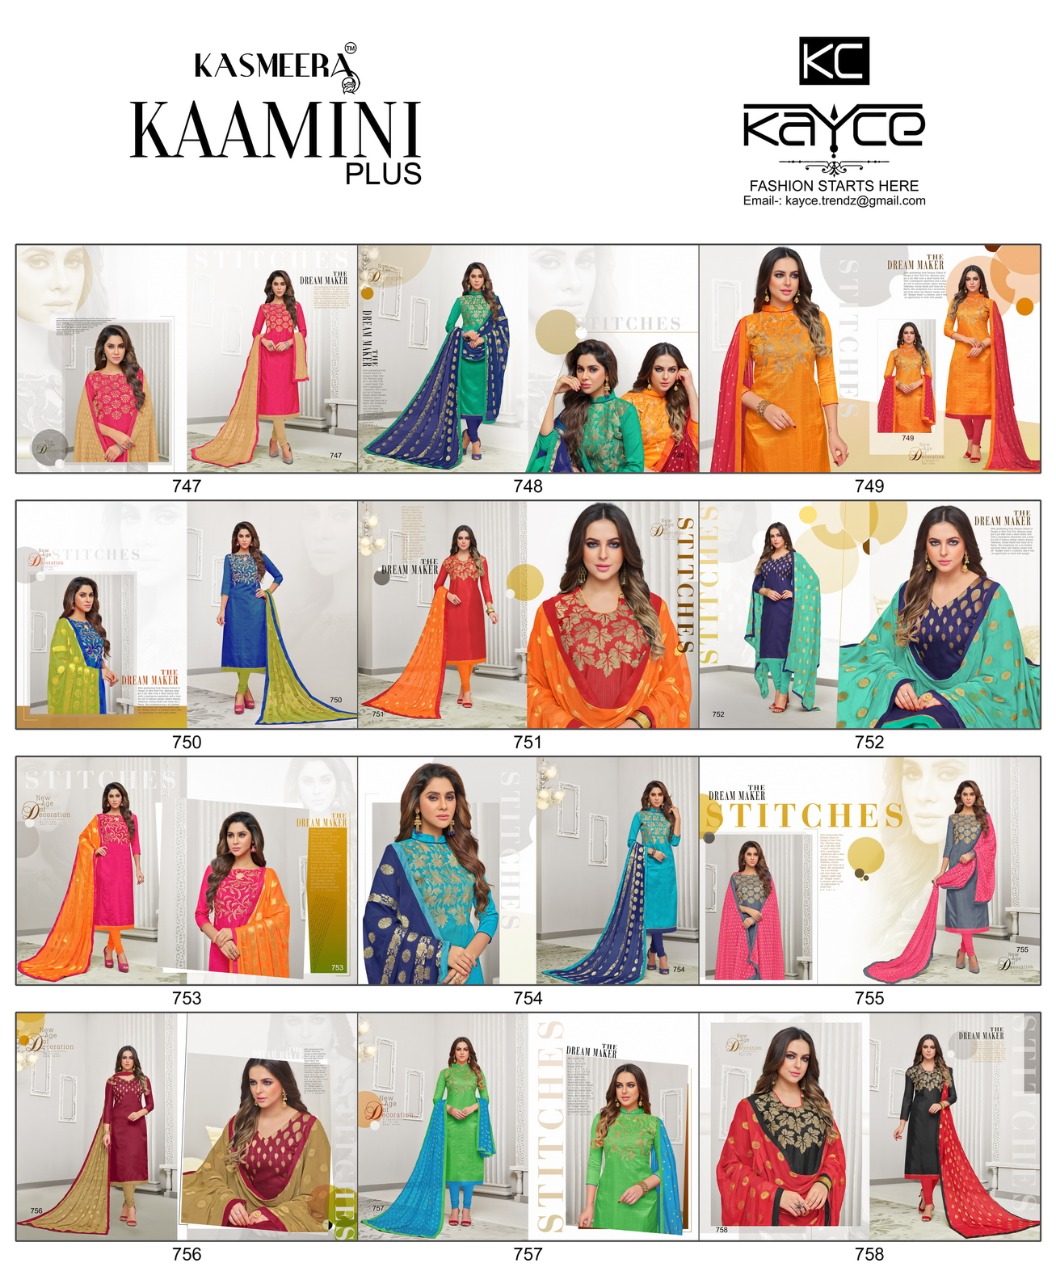 Kasmeera presents kaamini plus beautiful collection of salwar kameez